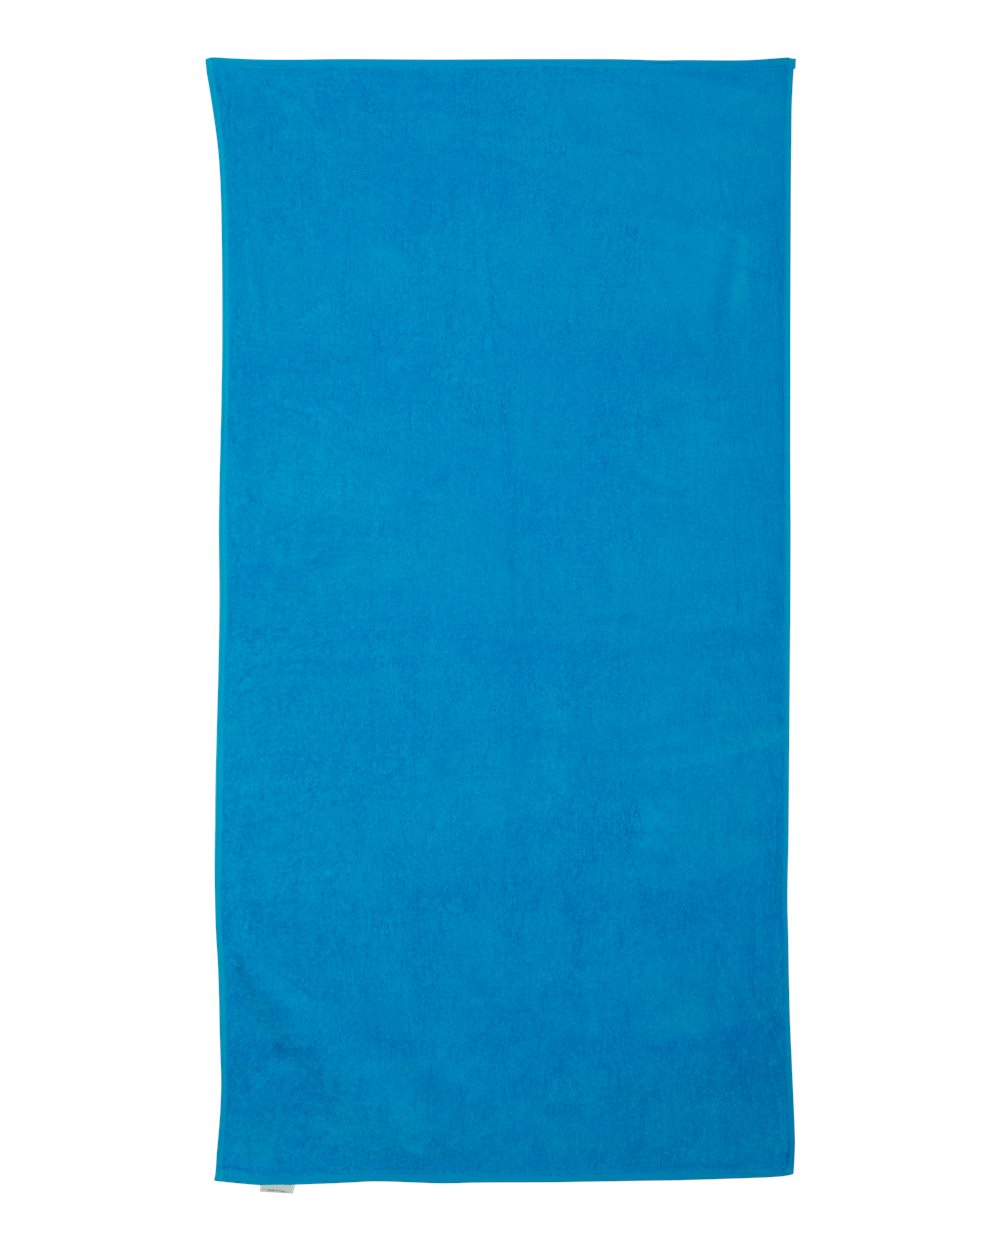 OAD OAD3060 - Value Beach Towel